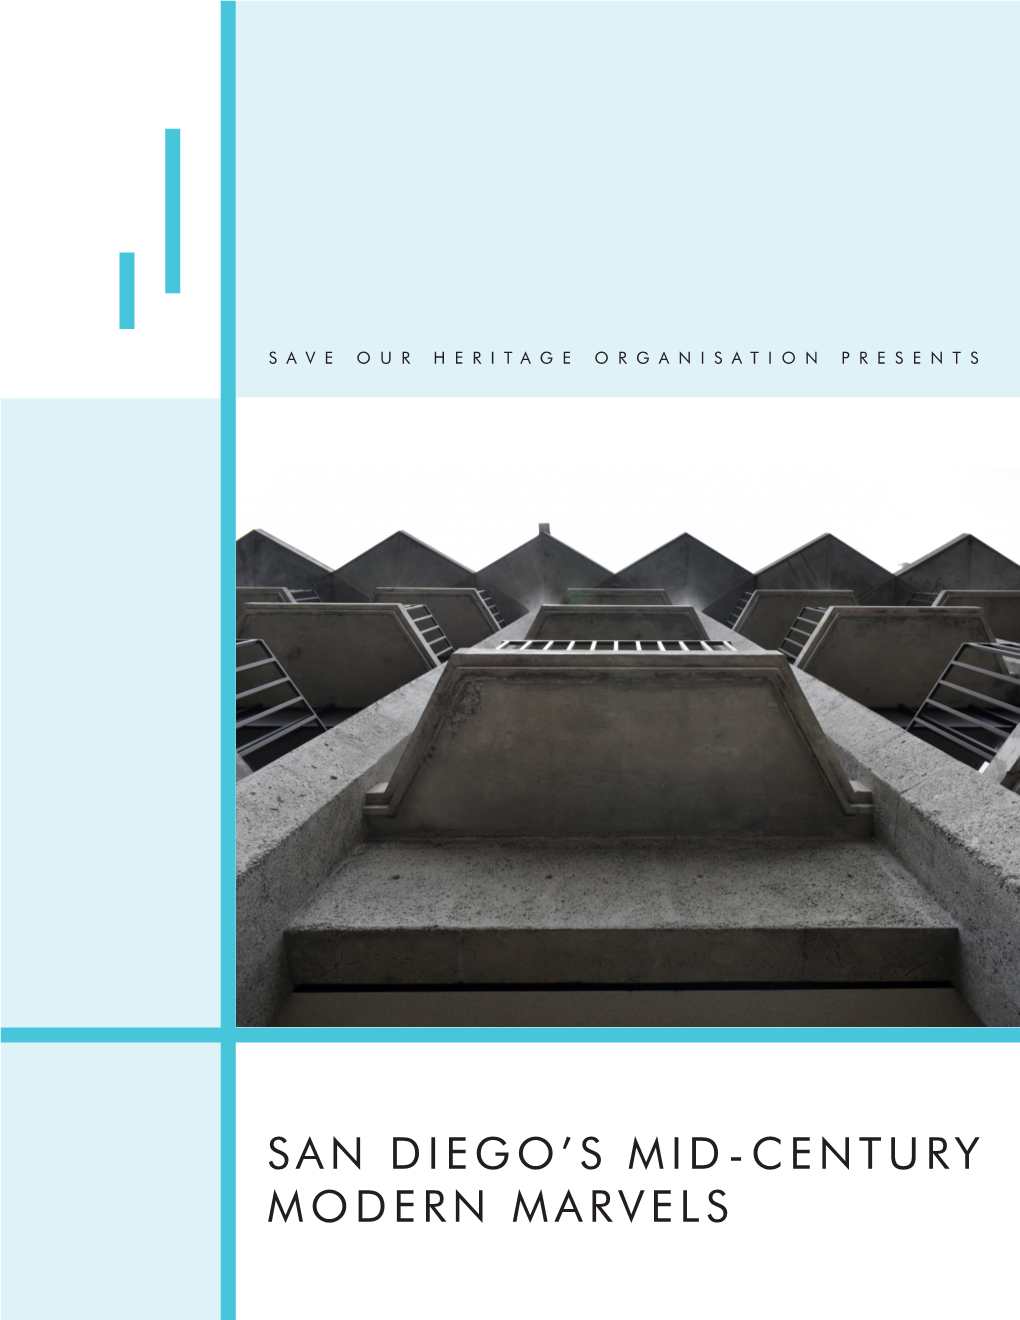 San Diego's Mid-Century Modern Marvels